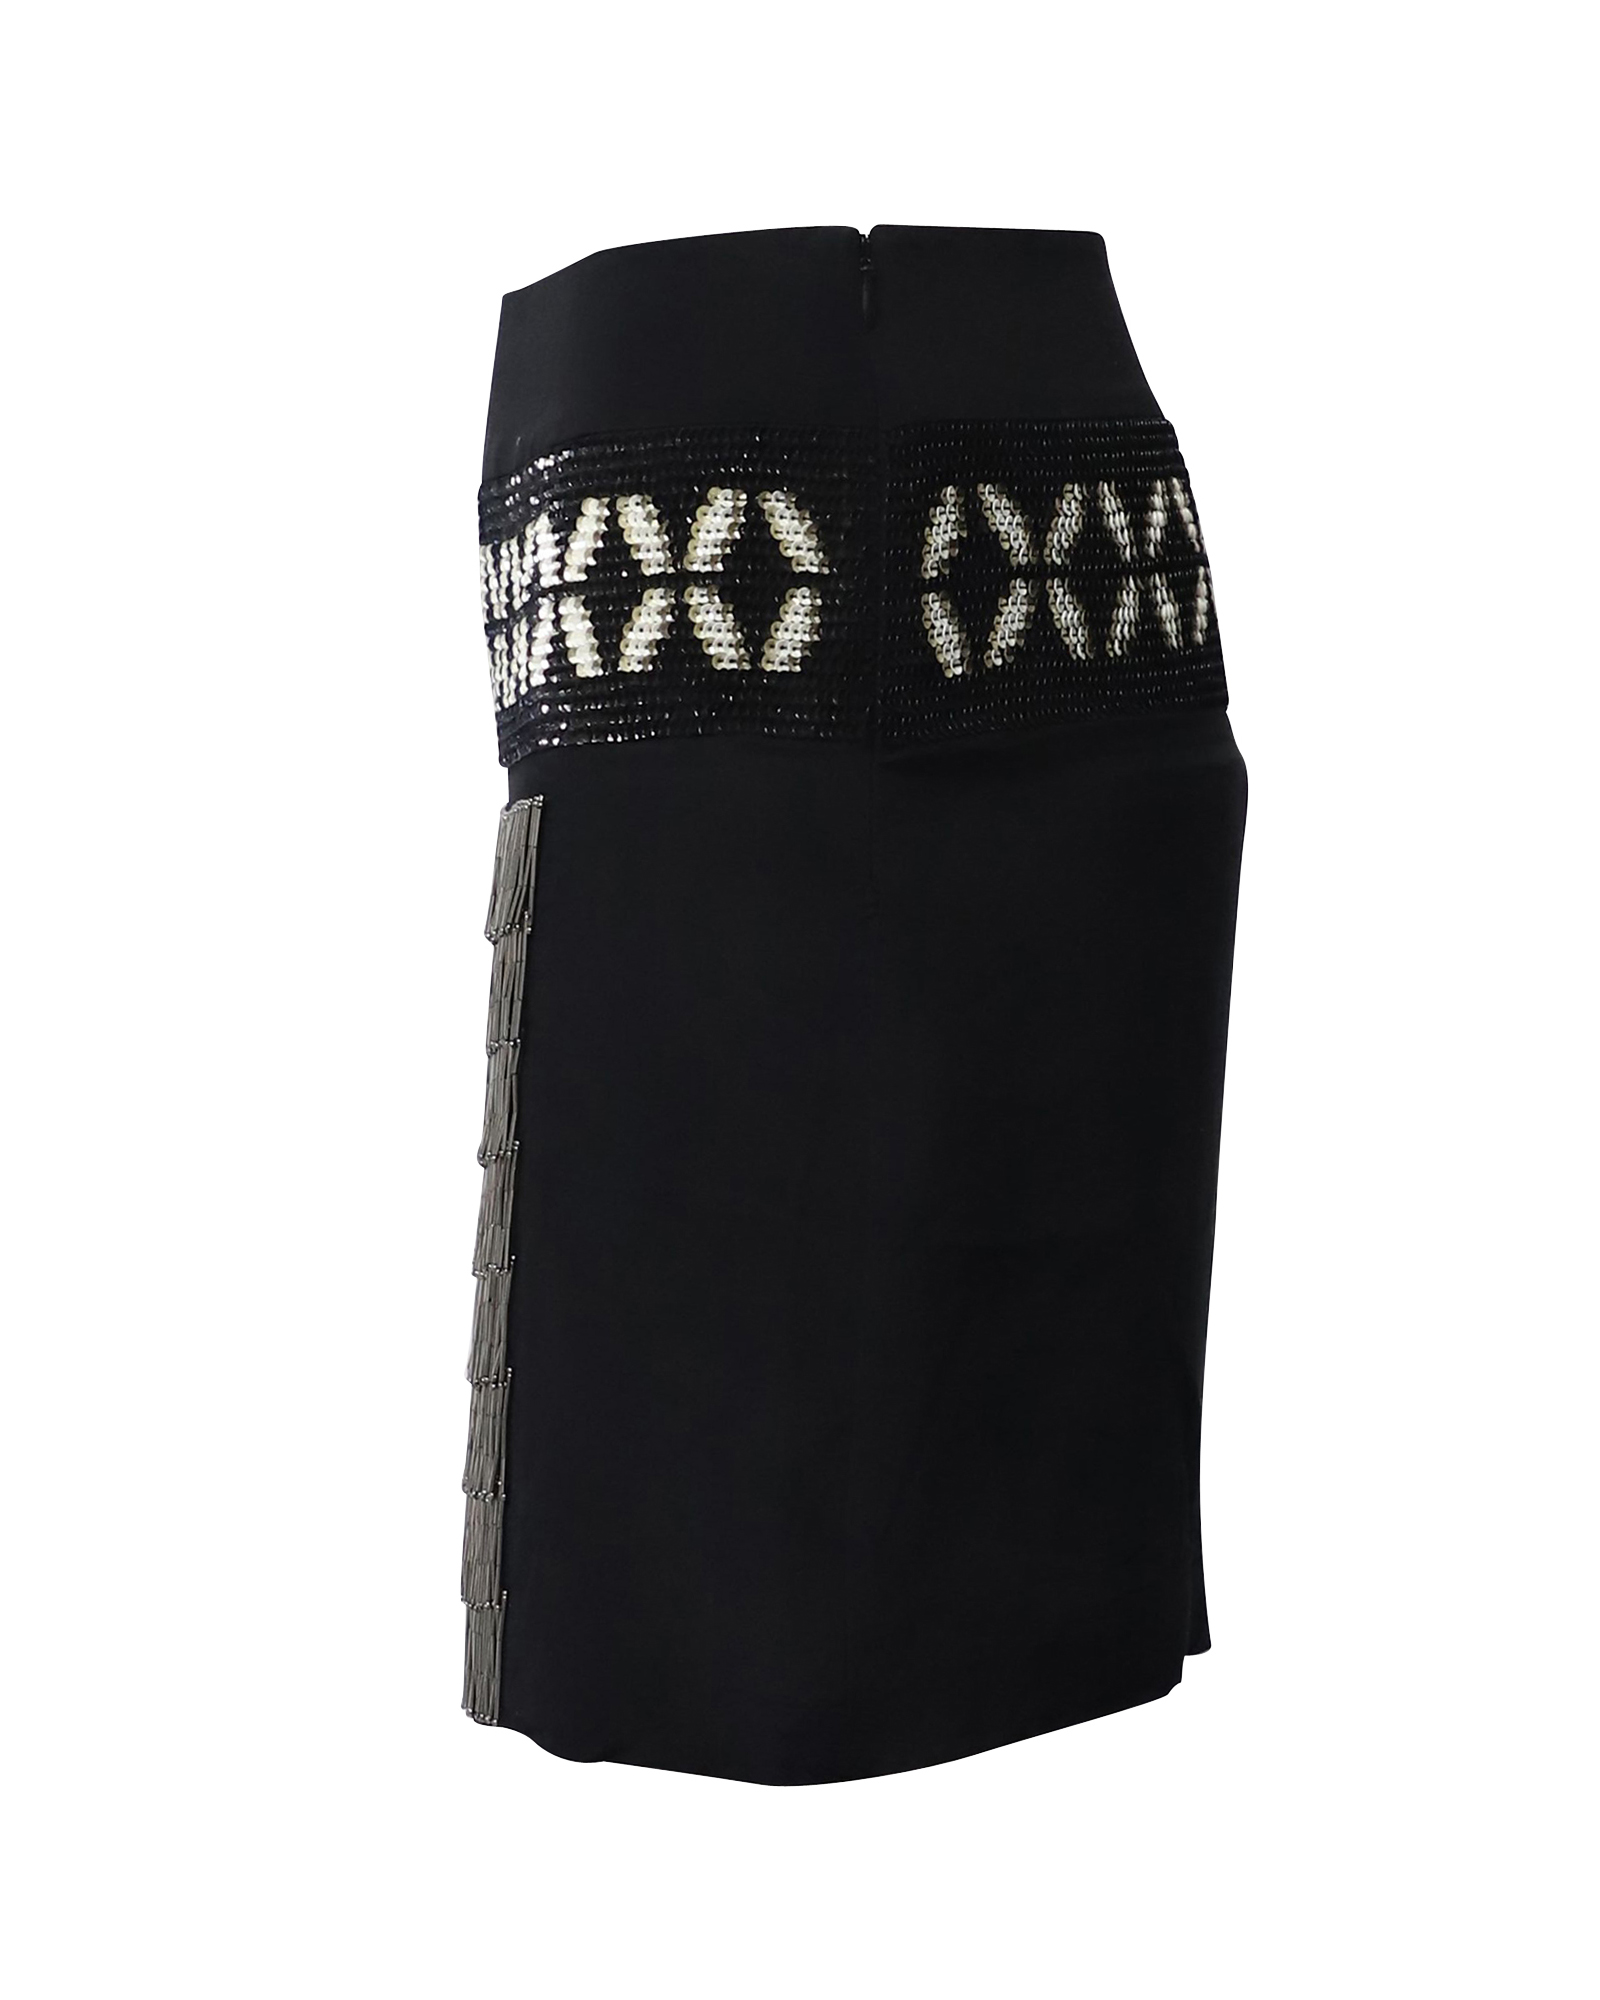 Embellished Black Silk Mini Skirt